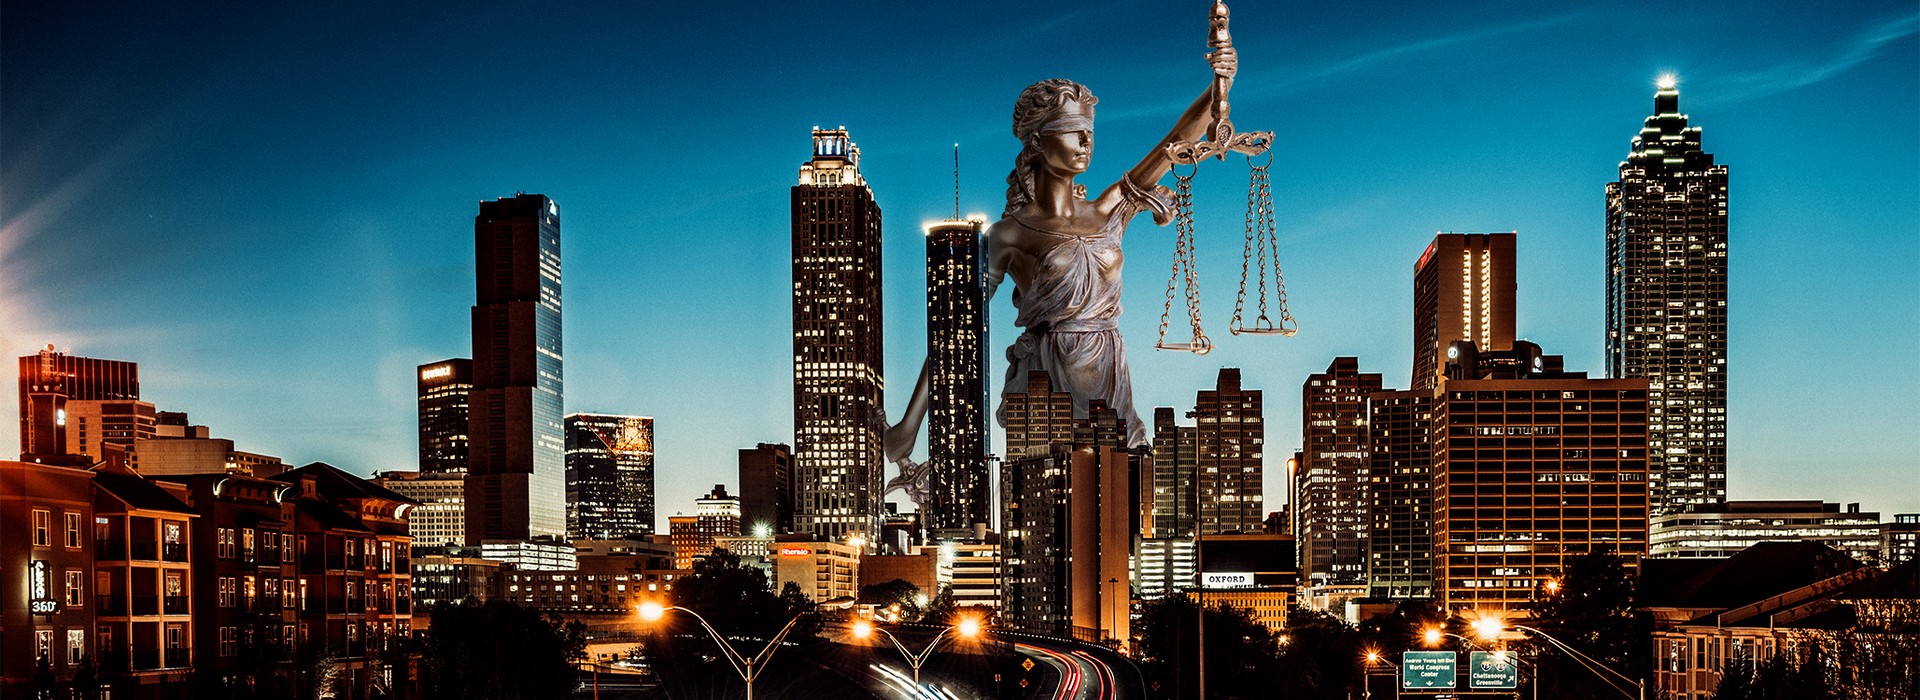 Evelyn Fletcher Davis - 2022 “The Strubinger Award” Winner - ADTA Law Featured News image